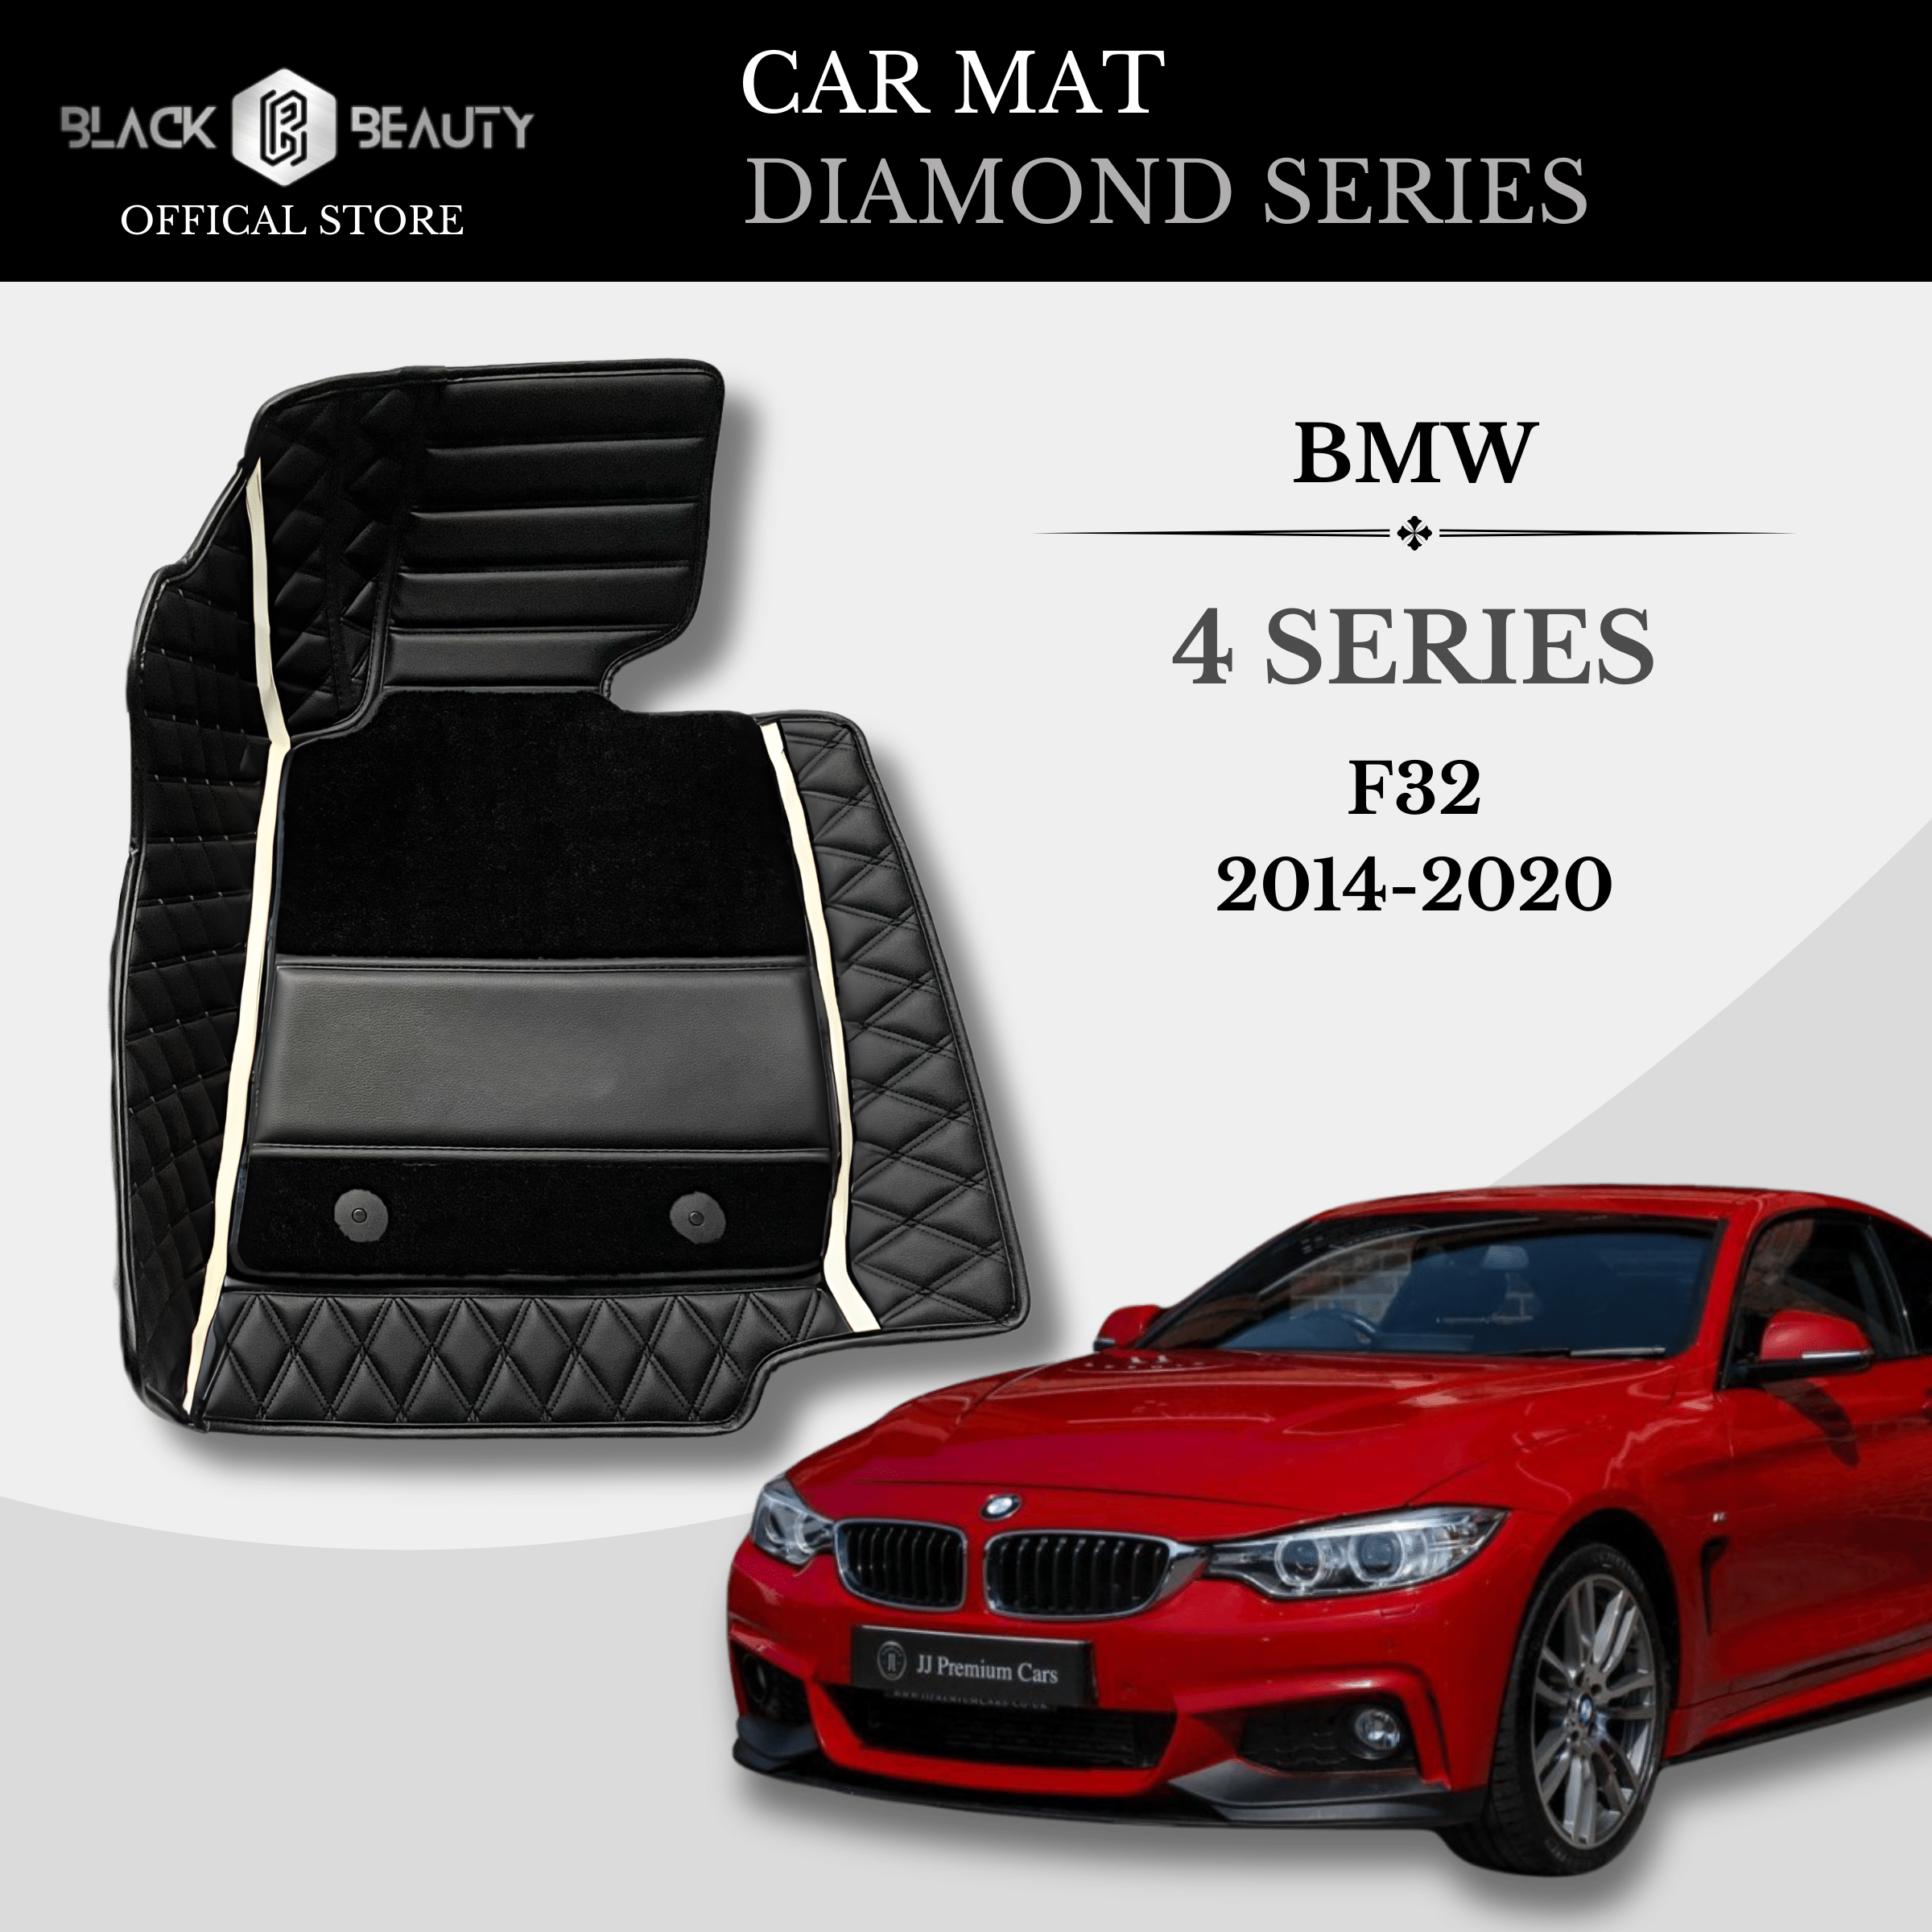 BMW 4 Series F32 (2014-2020) - Diamond Series Car Mat